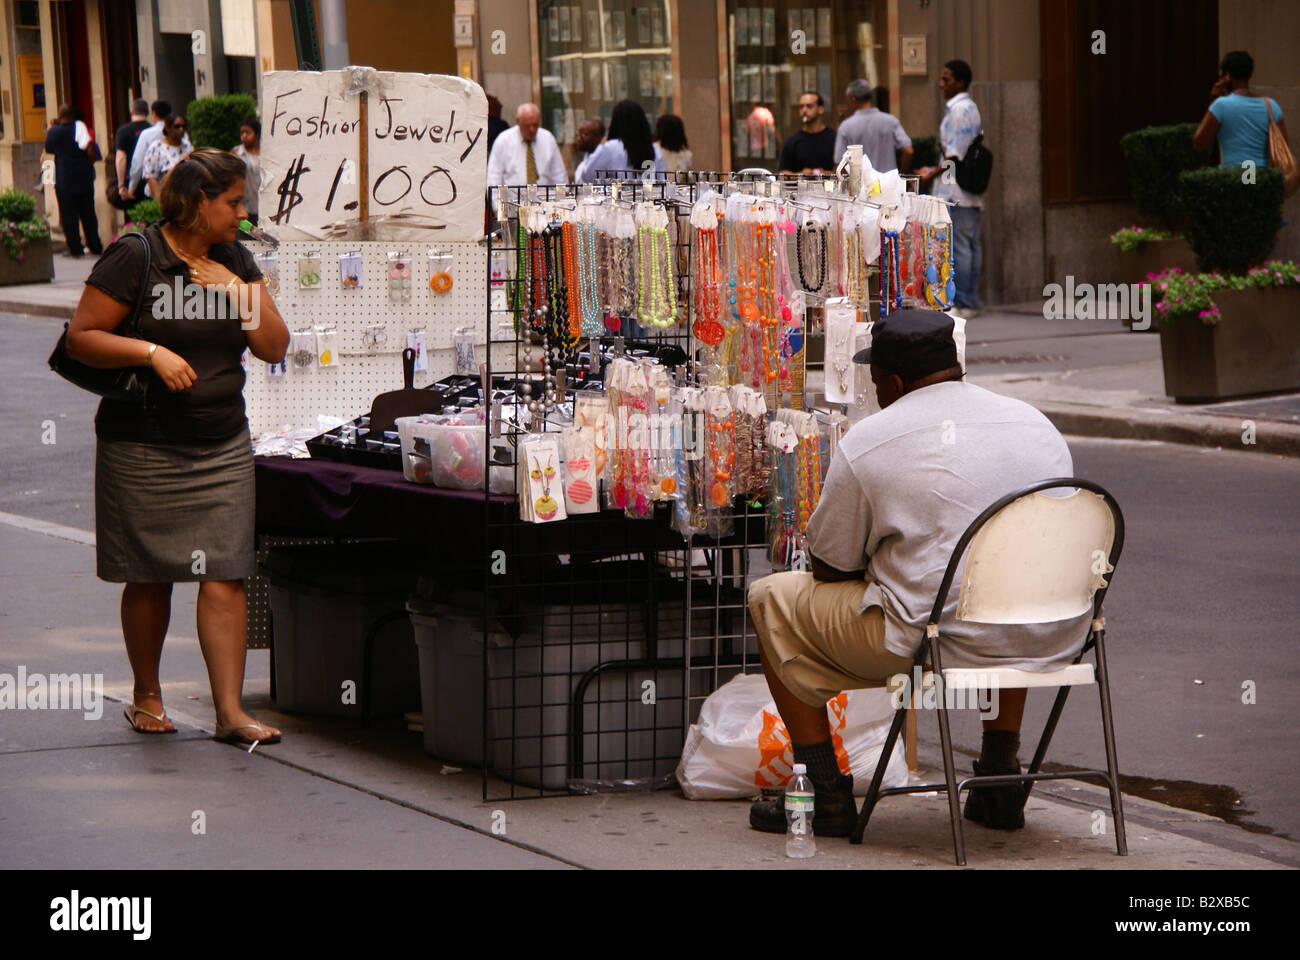 Street vendor sells jewelry, NY Stock Photo - Alamy